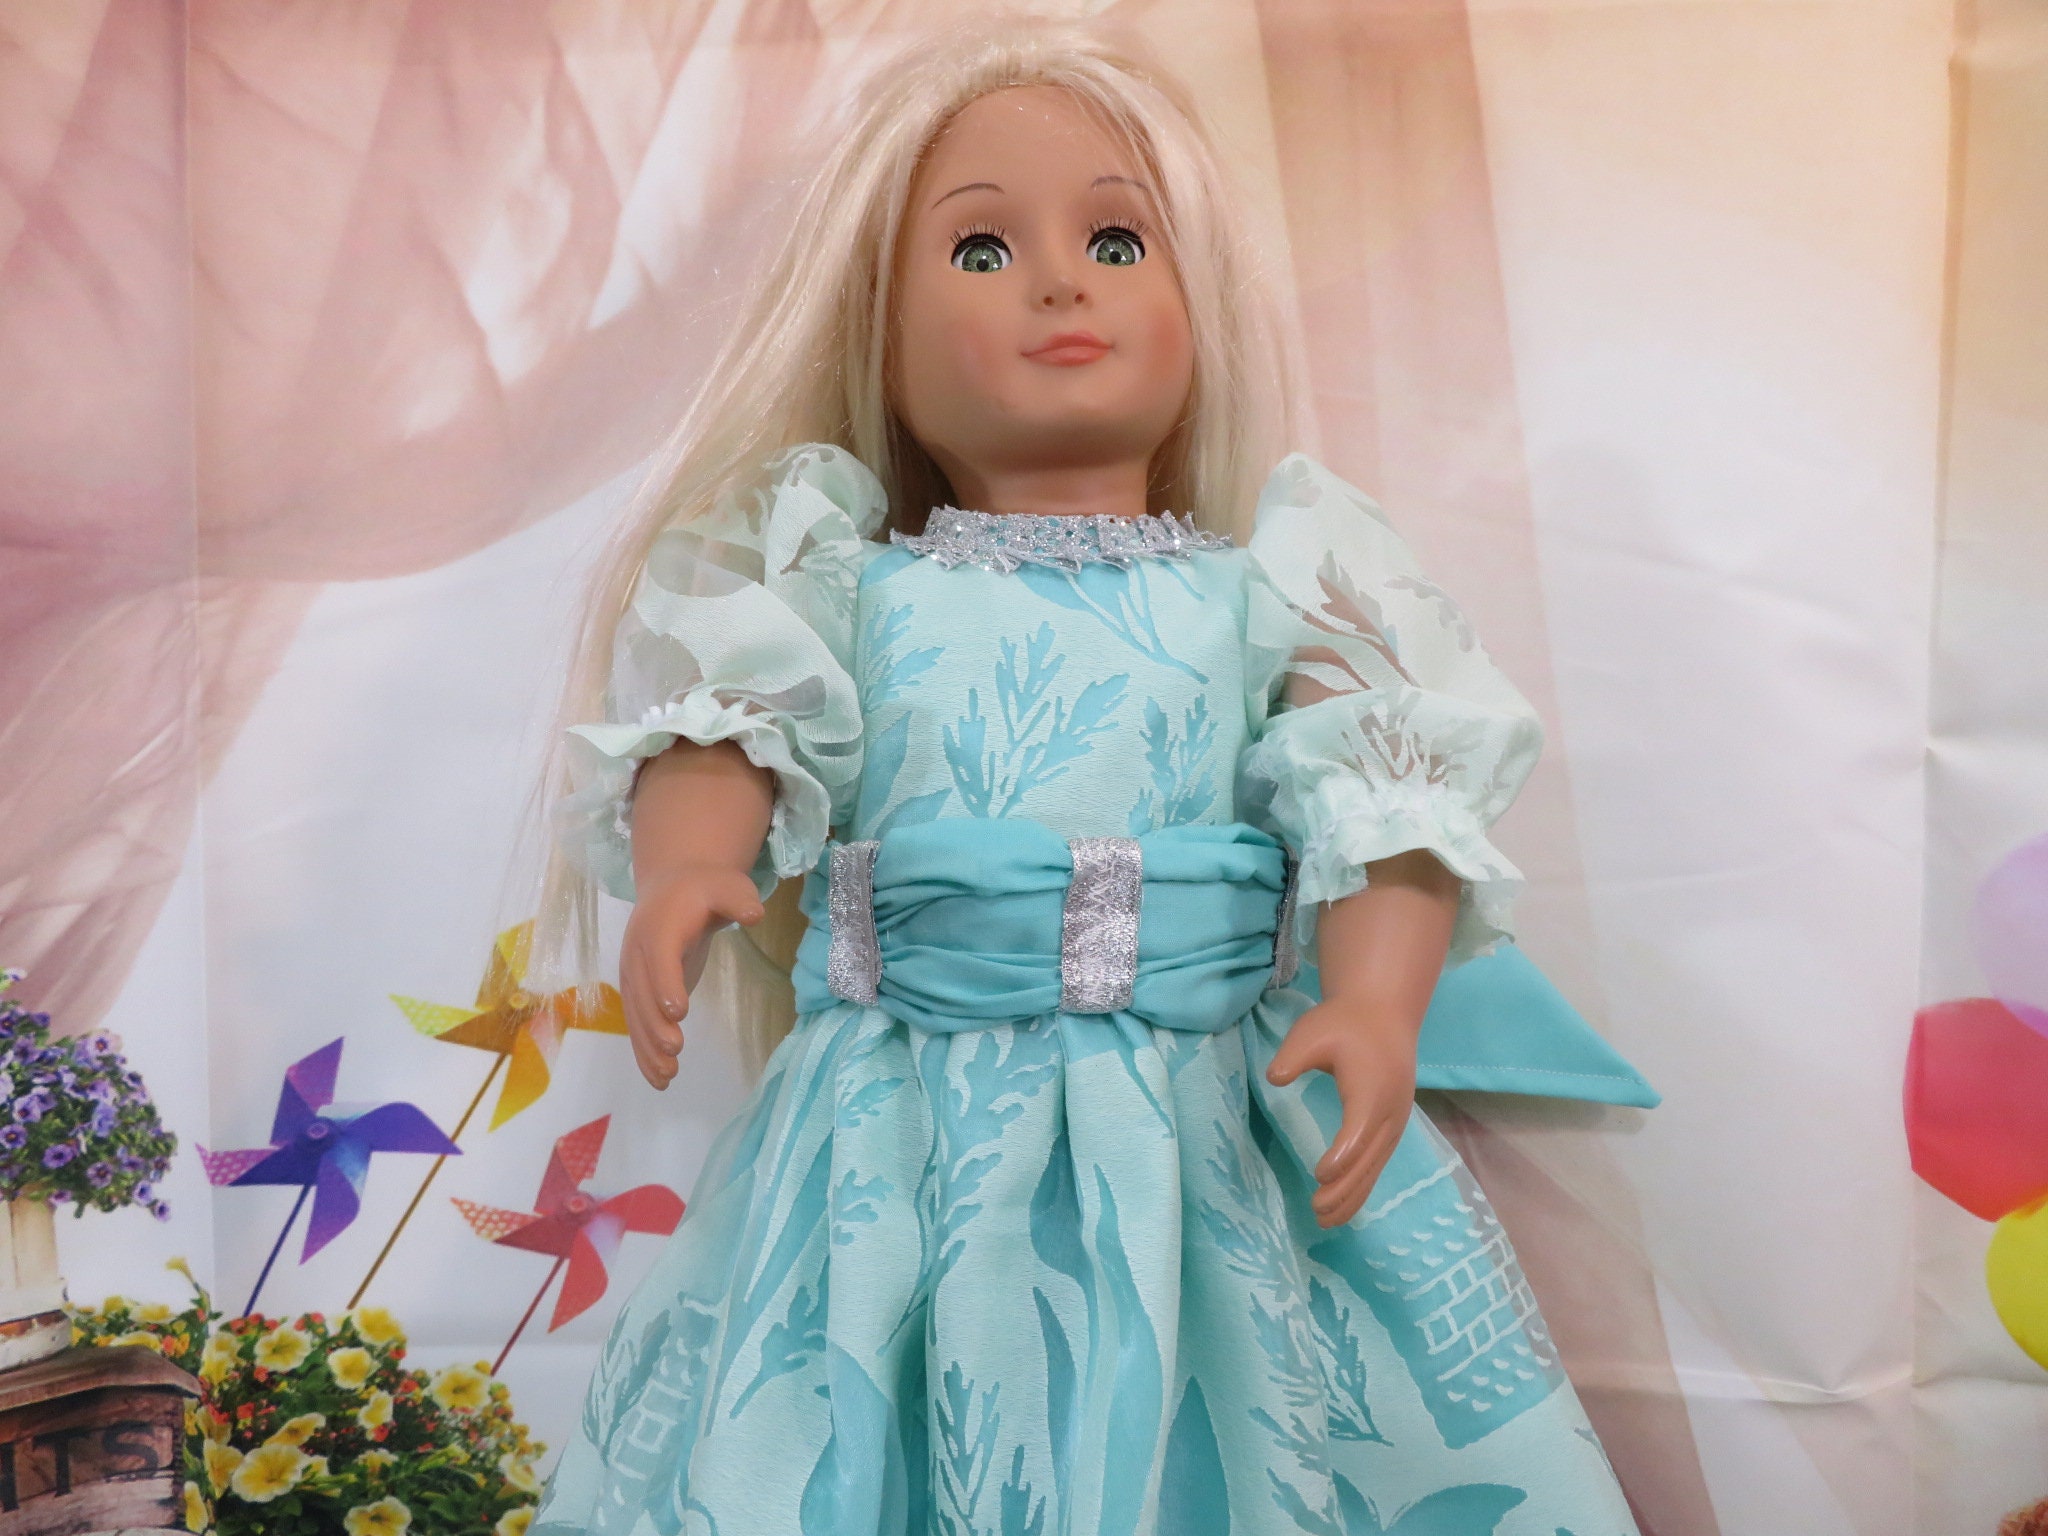 4. "Aqua" 18 inch doll with blue hair - wide 5